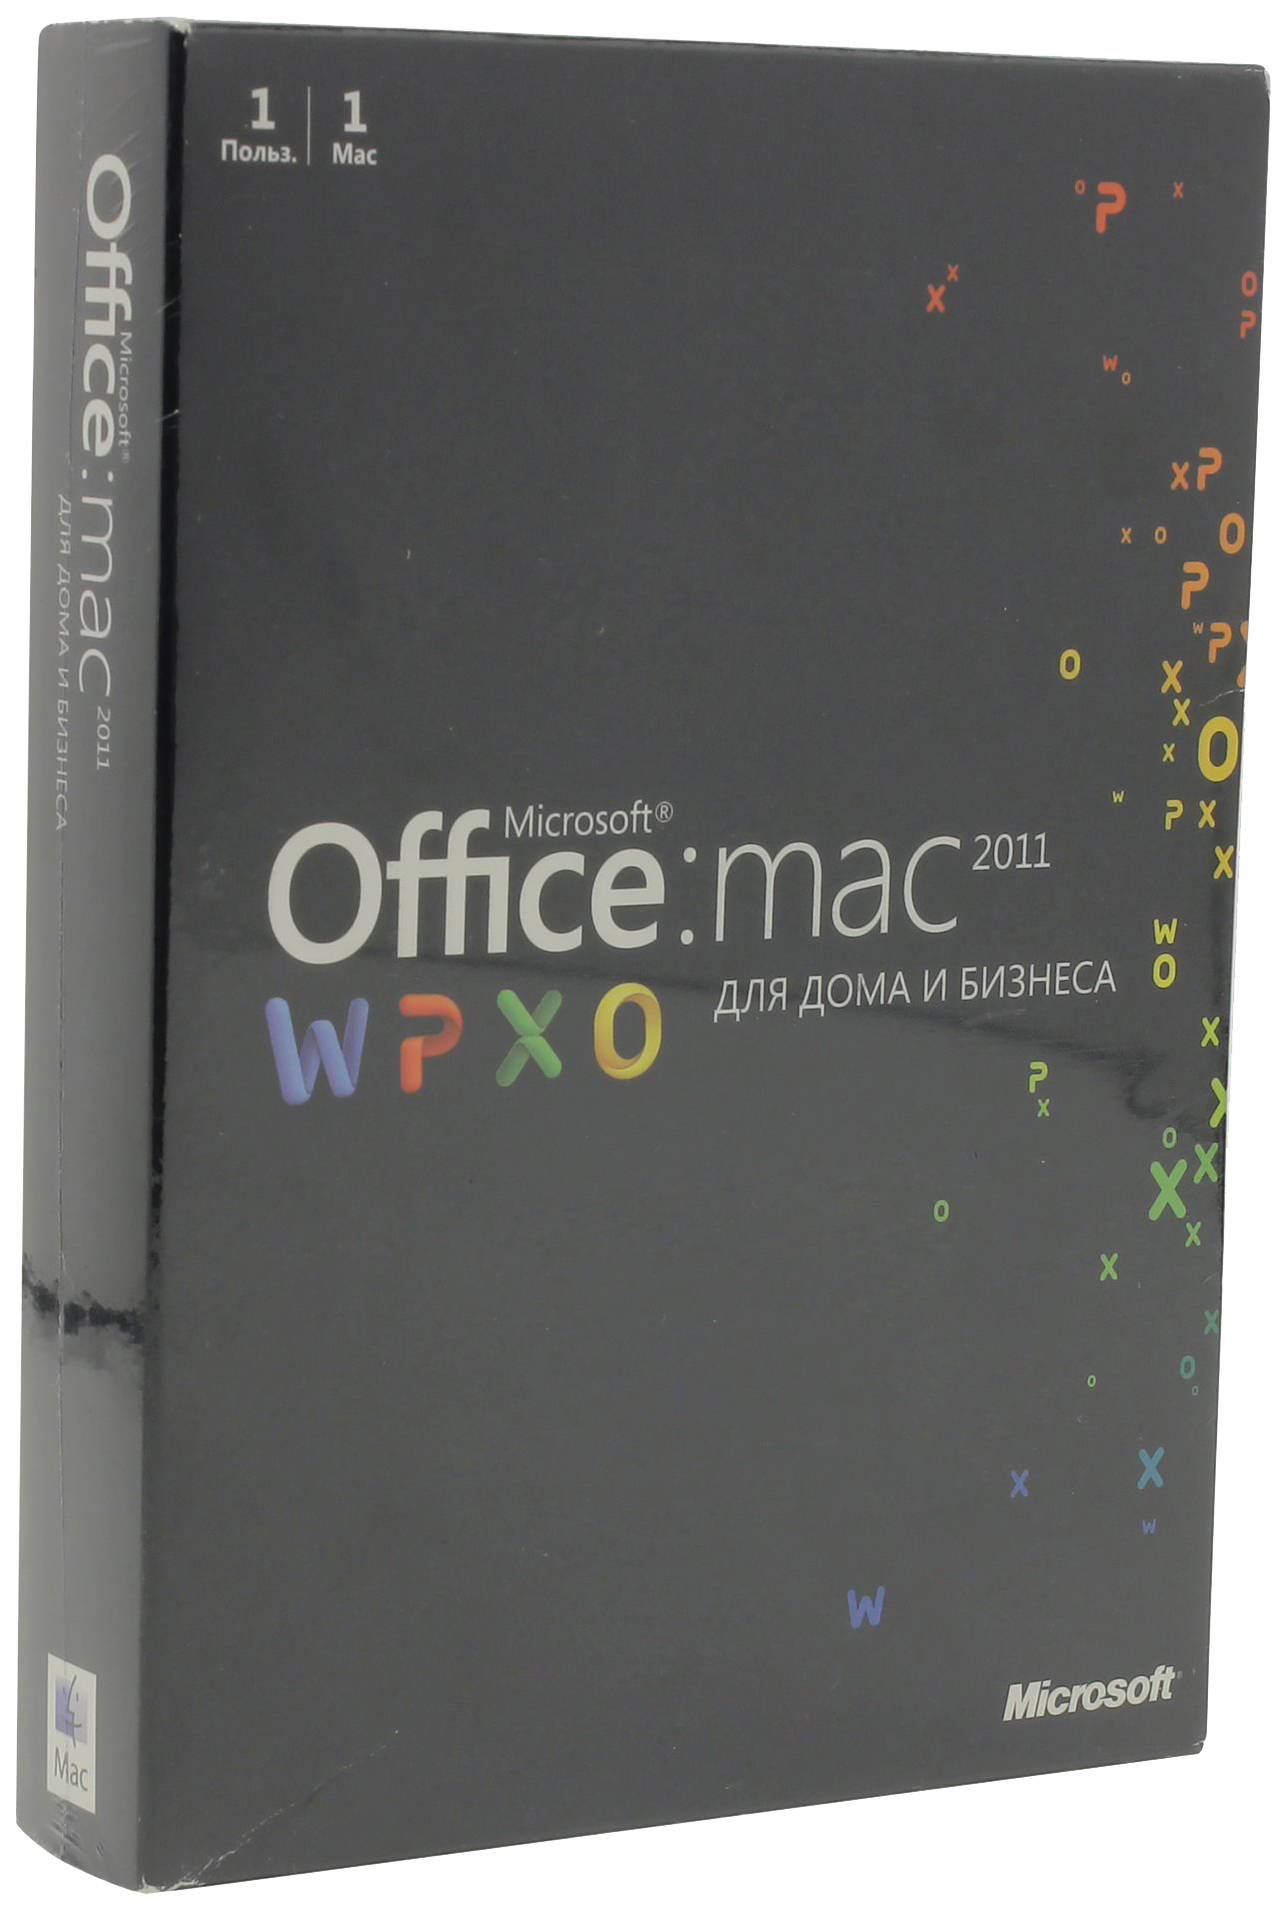 фото Офисная программа microsoft office mac для дома и бизнеса 2011 1 устройство, 1 год